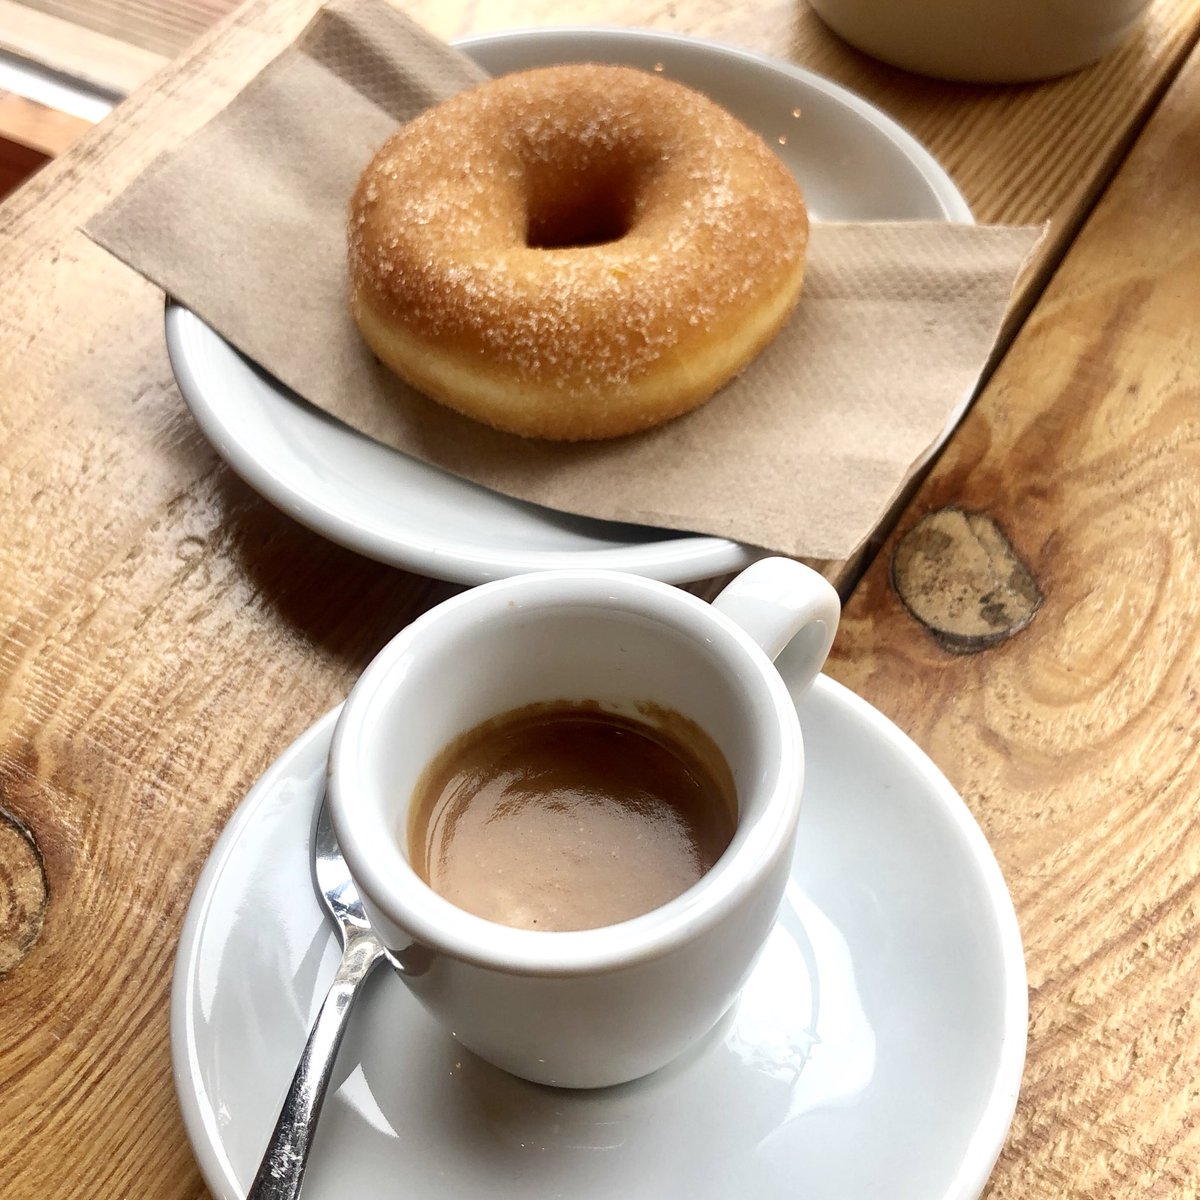 #autumn is here 🍁 grab a #applecinnamon #doughnut with your #italianespresso . #premiumespresso #italiancoffeeclub #italiancoffee #coffee #coffeespot #greatcoffee #shepherdsbush #londoncoffeeshops #doughnuttime